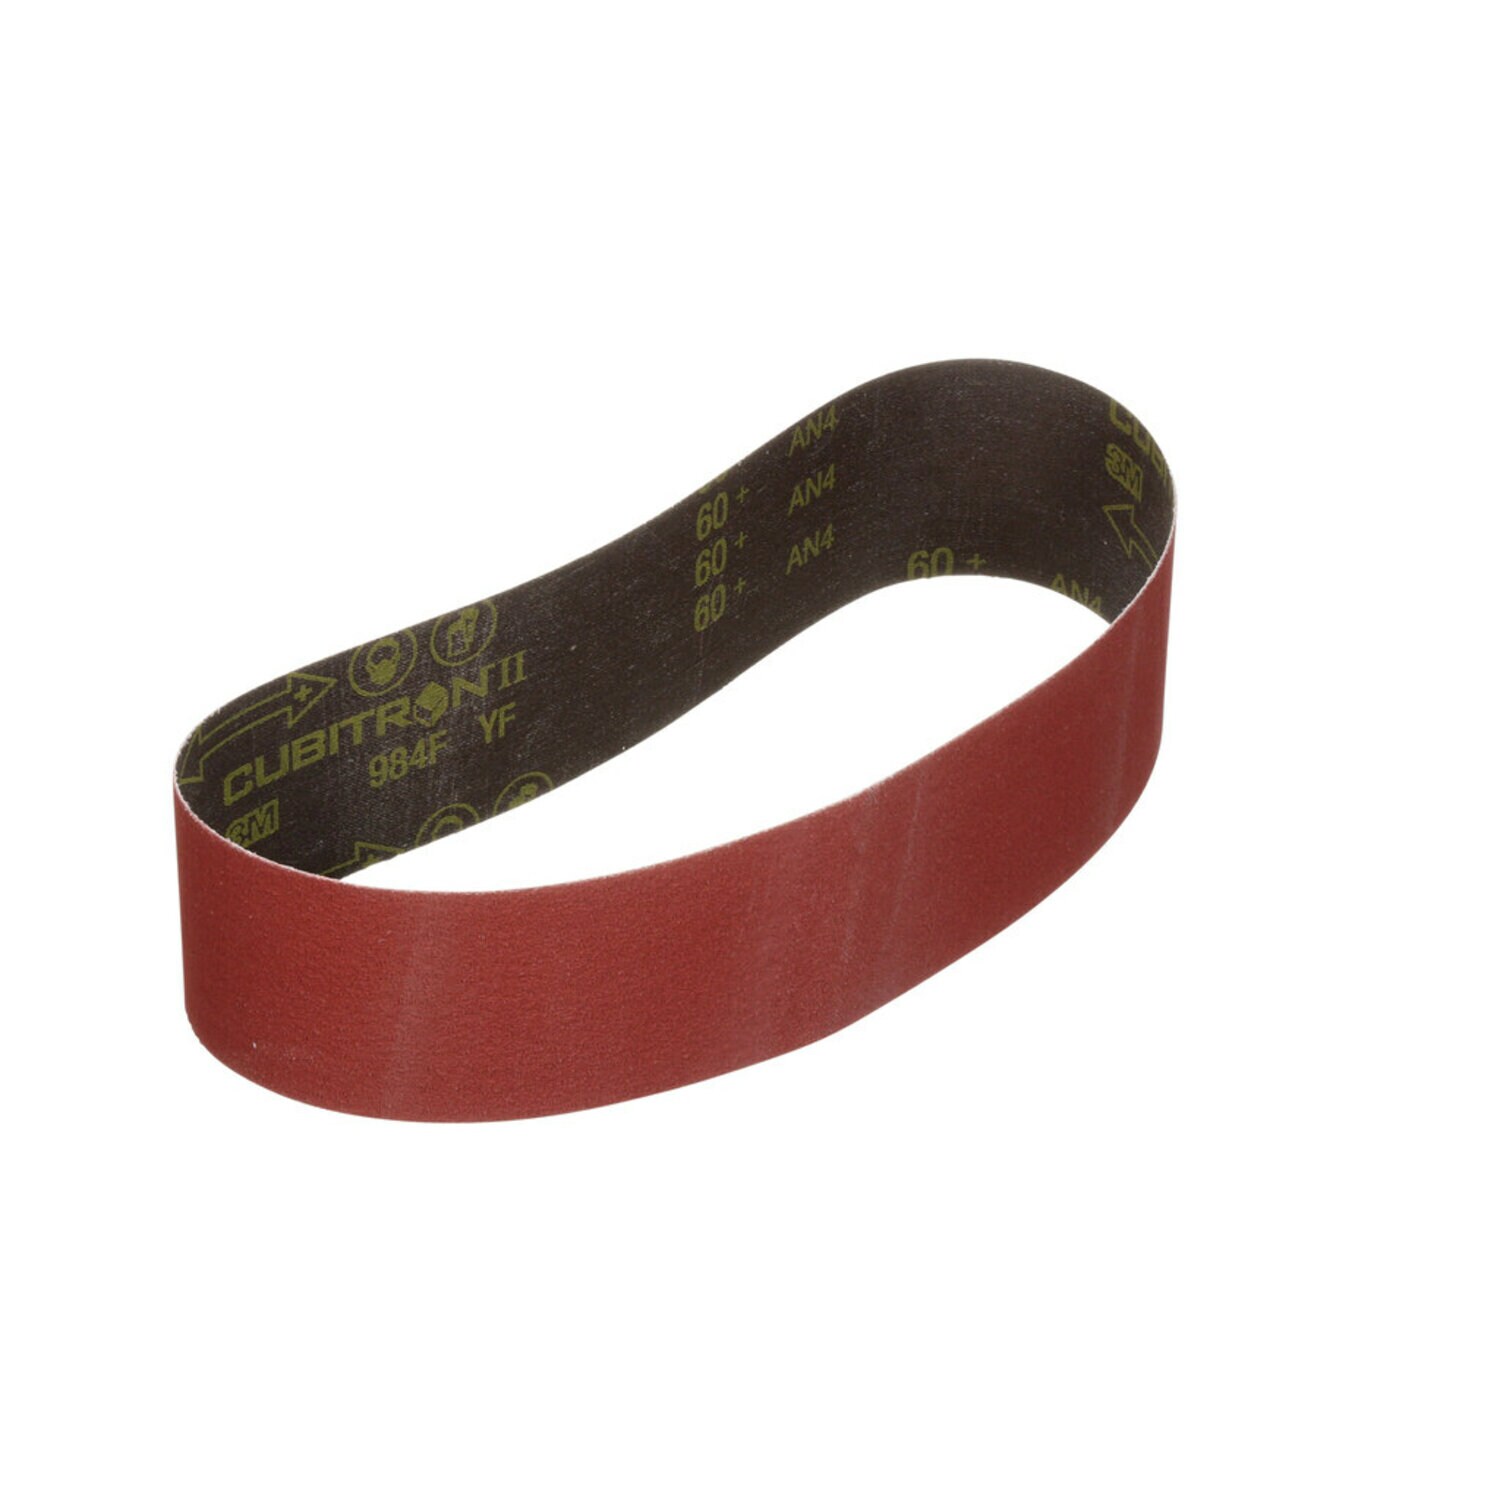 7010513564 - 3M Cubitron II Cloth Belt 984F, 80+ YF-weight, 2 in x 48 in, Film-lok,
Single-flex